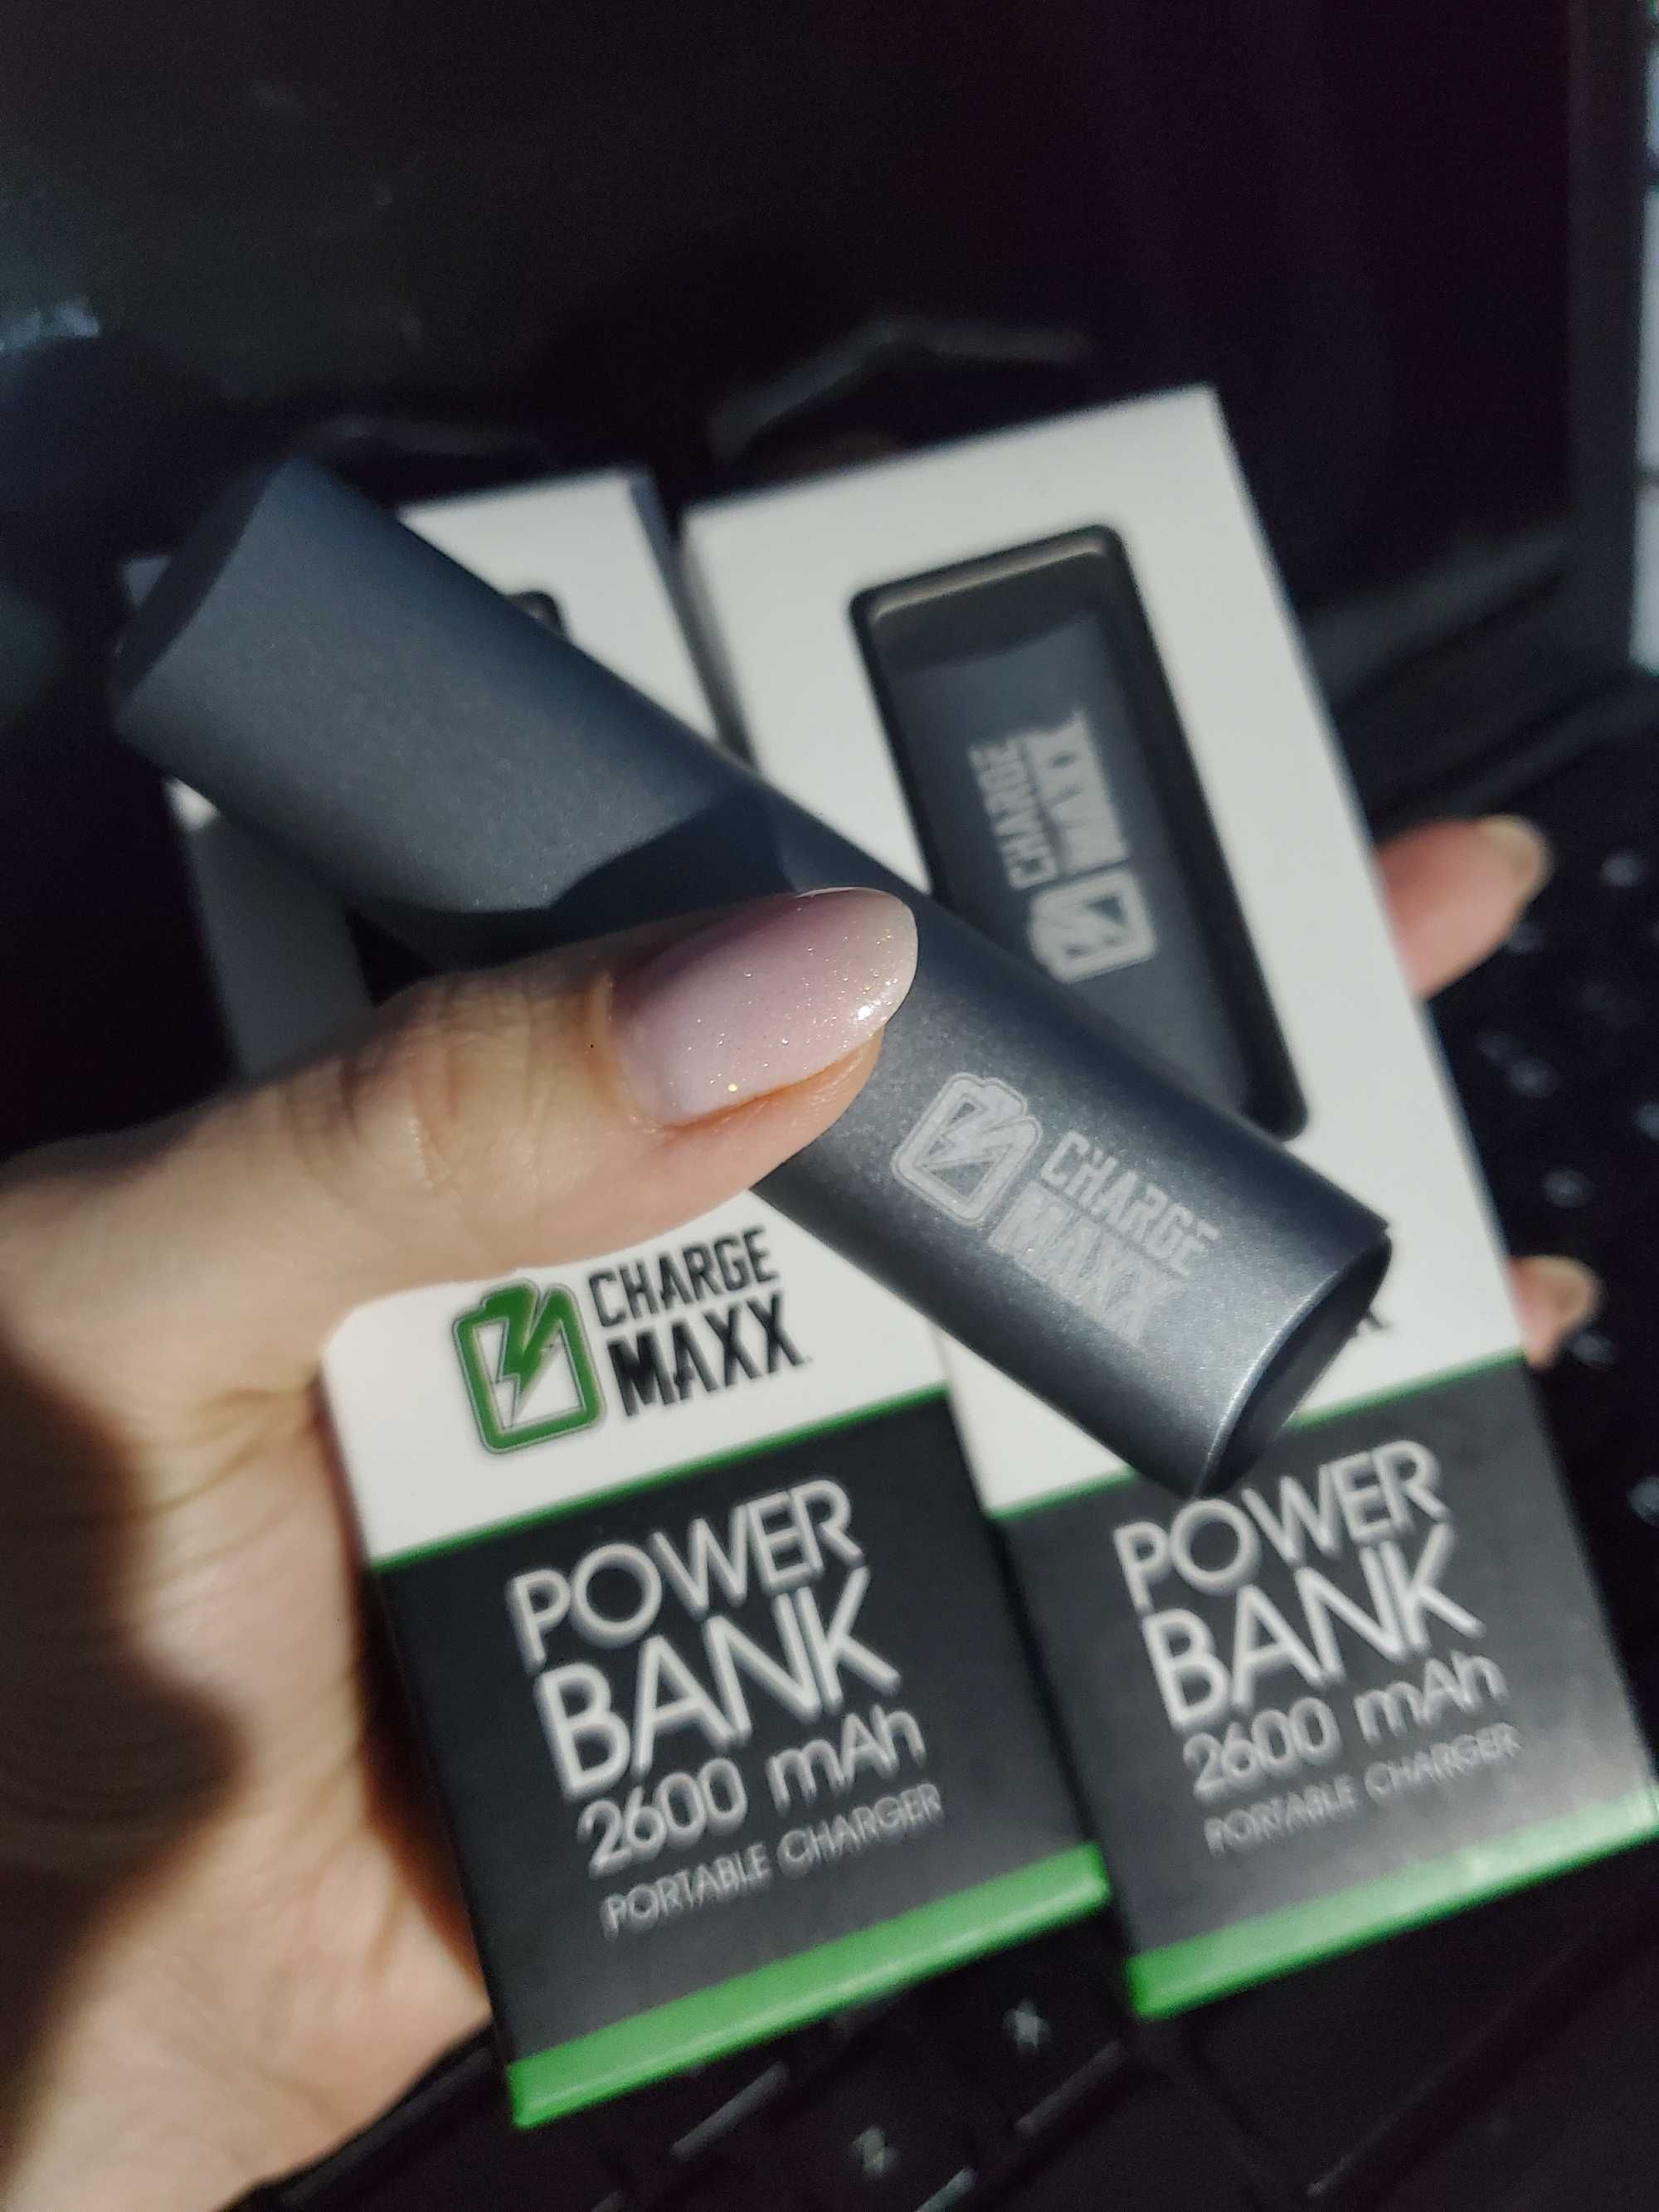 Павербанк power bank portable charger – 2,600mAh Charge MAXX